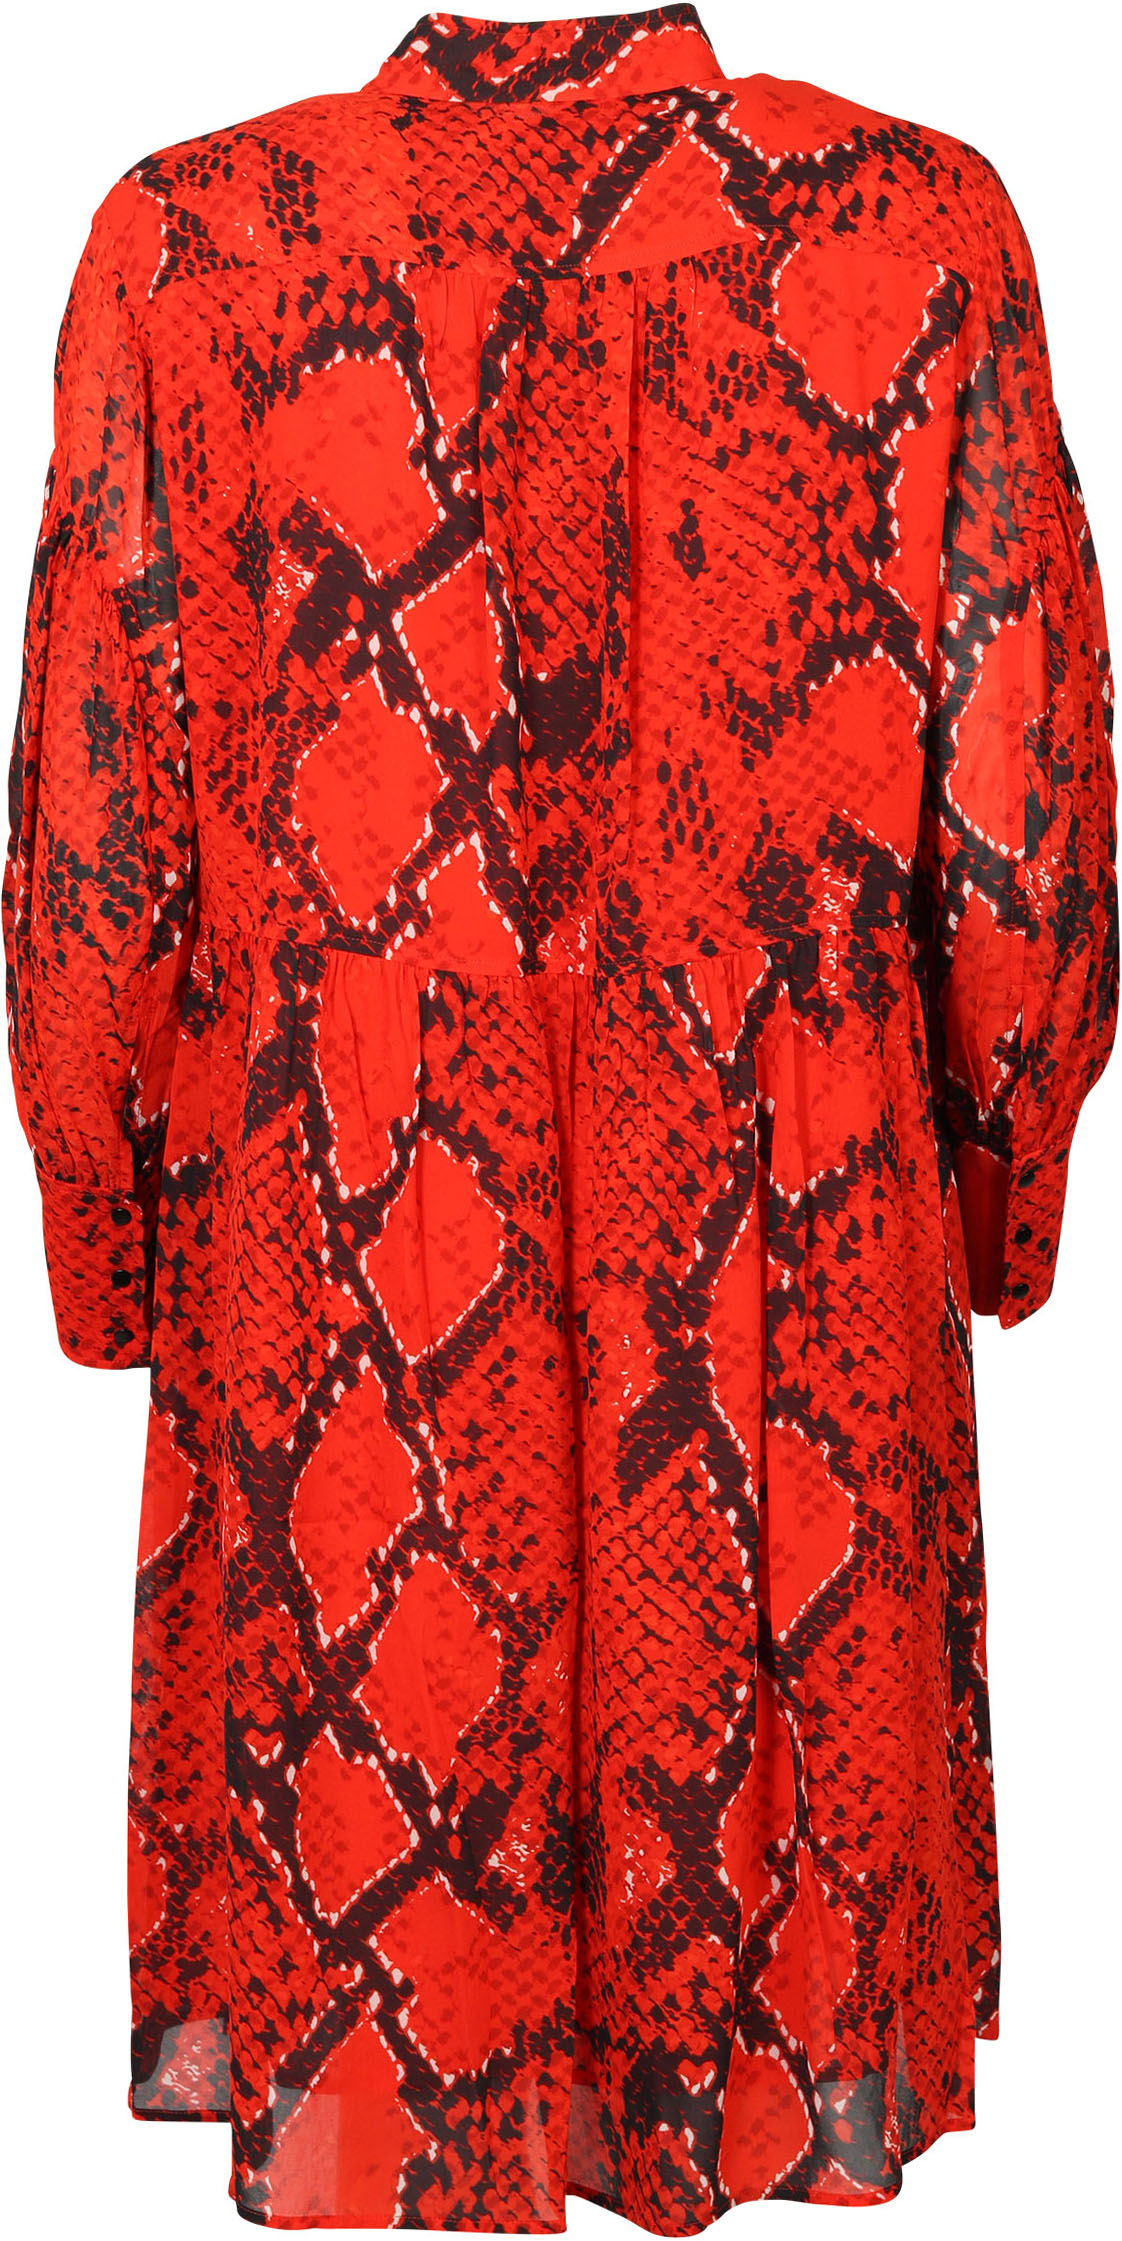 Lala Berlin Dress Danika Red Fire Python Printed